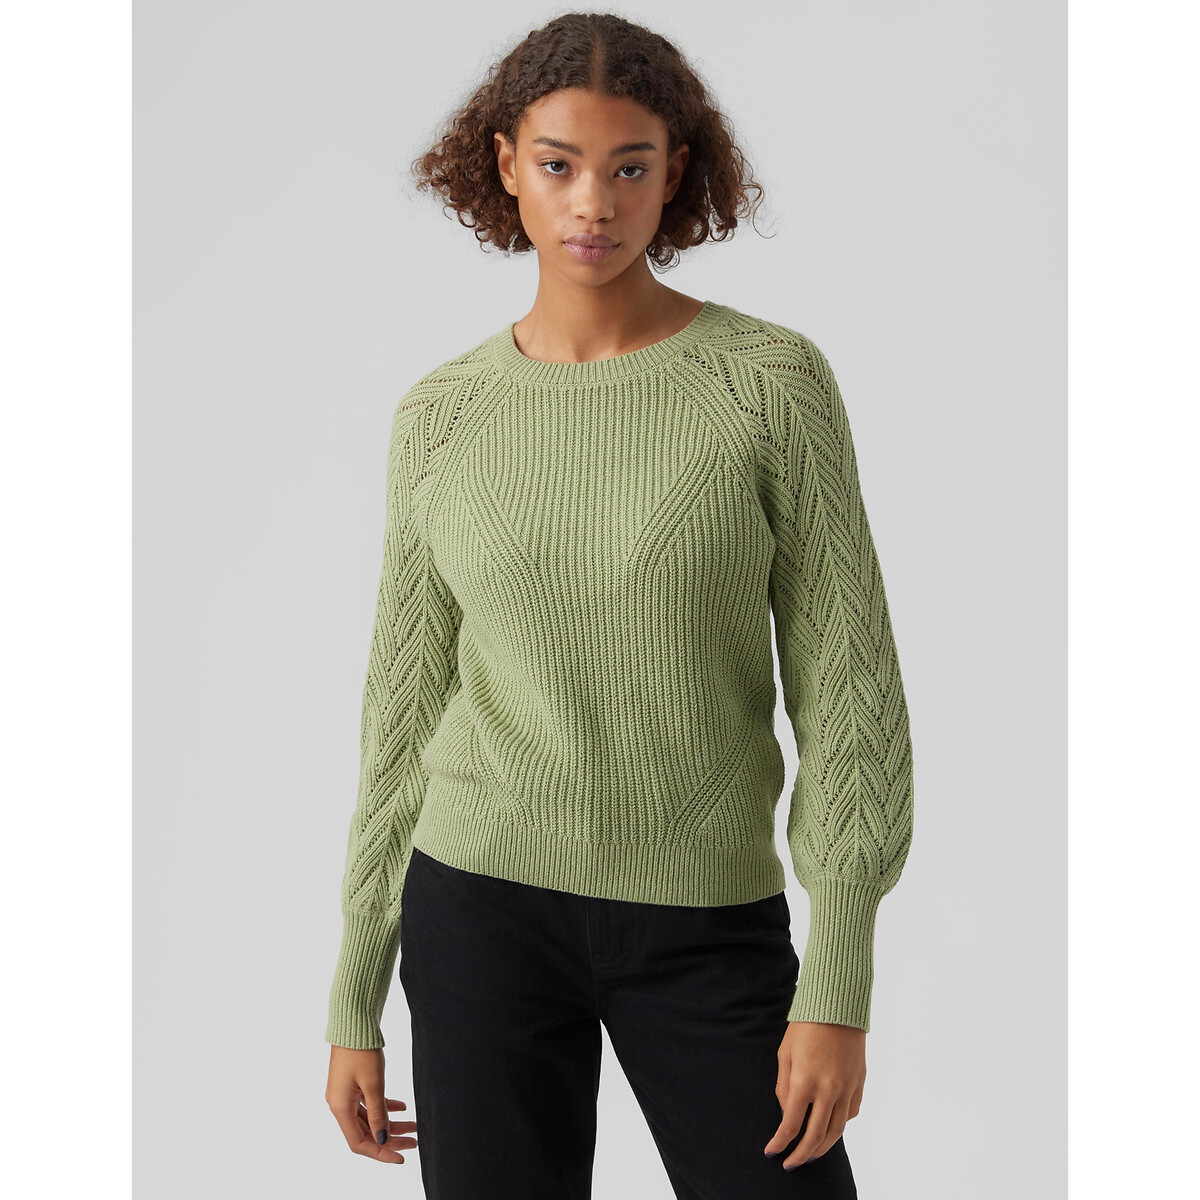 Пуловер С круглым вырезом рукава из ажурного трикотажа S зеленый LaRedoute, размер S - фото 2